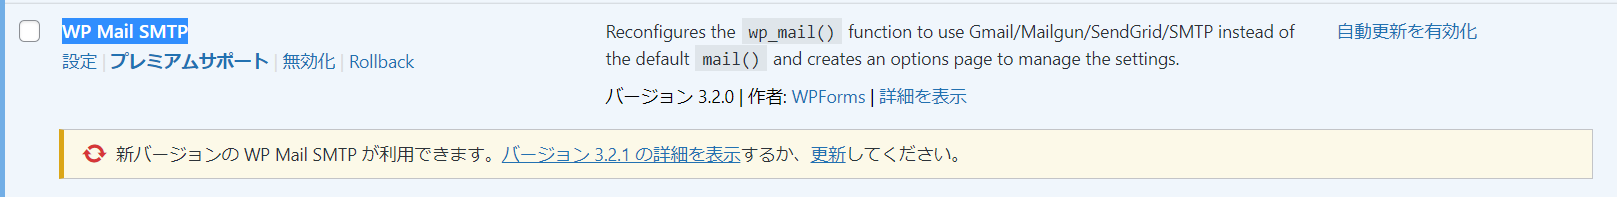 WP Mail SMTPの詳細1